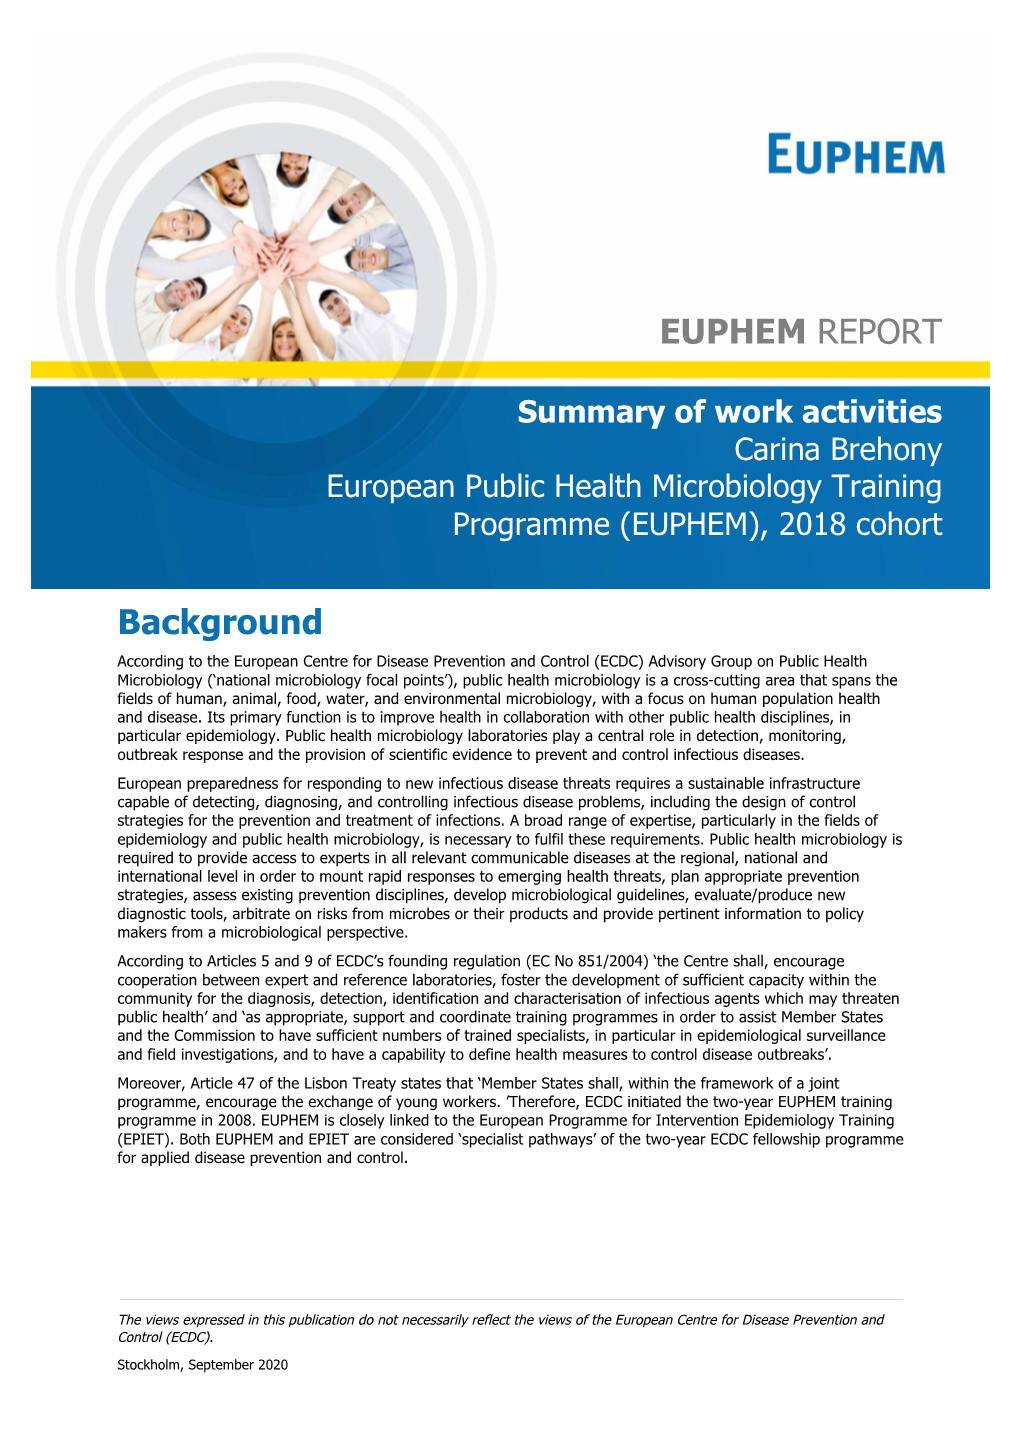 EUPHEM Report -Summary of Work Activities, Carina Brehony